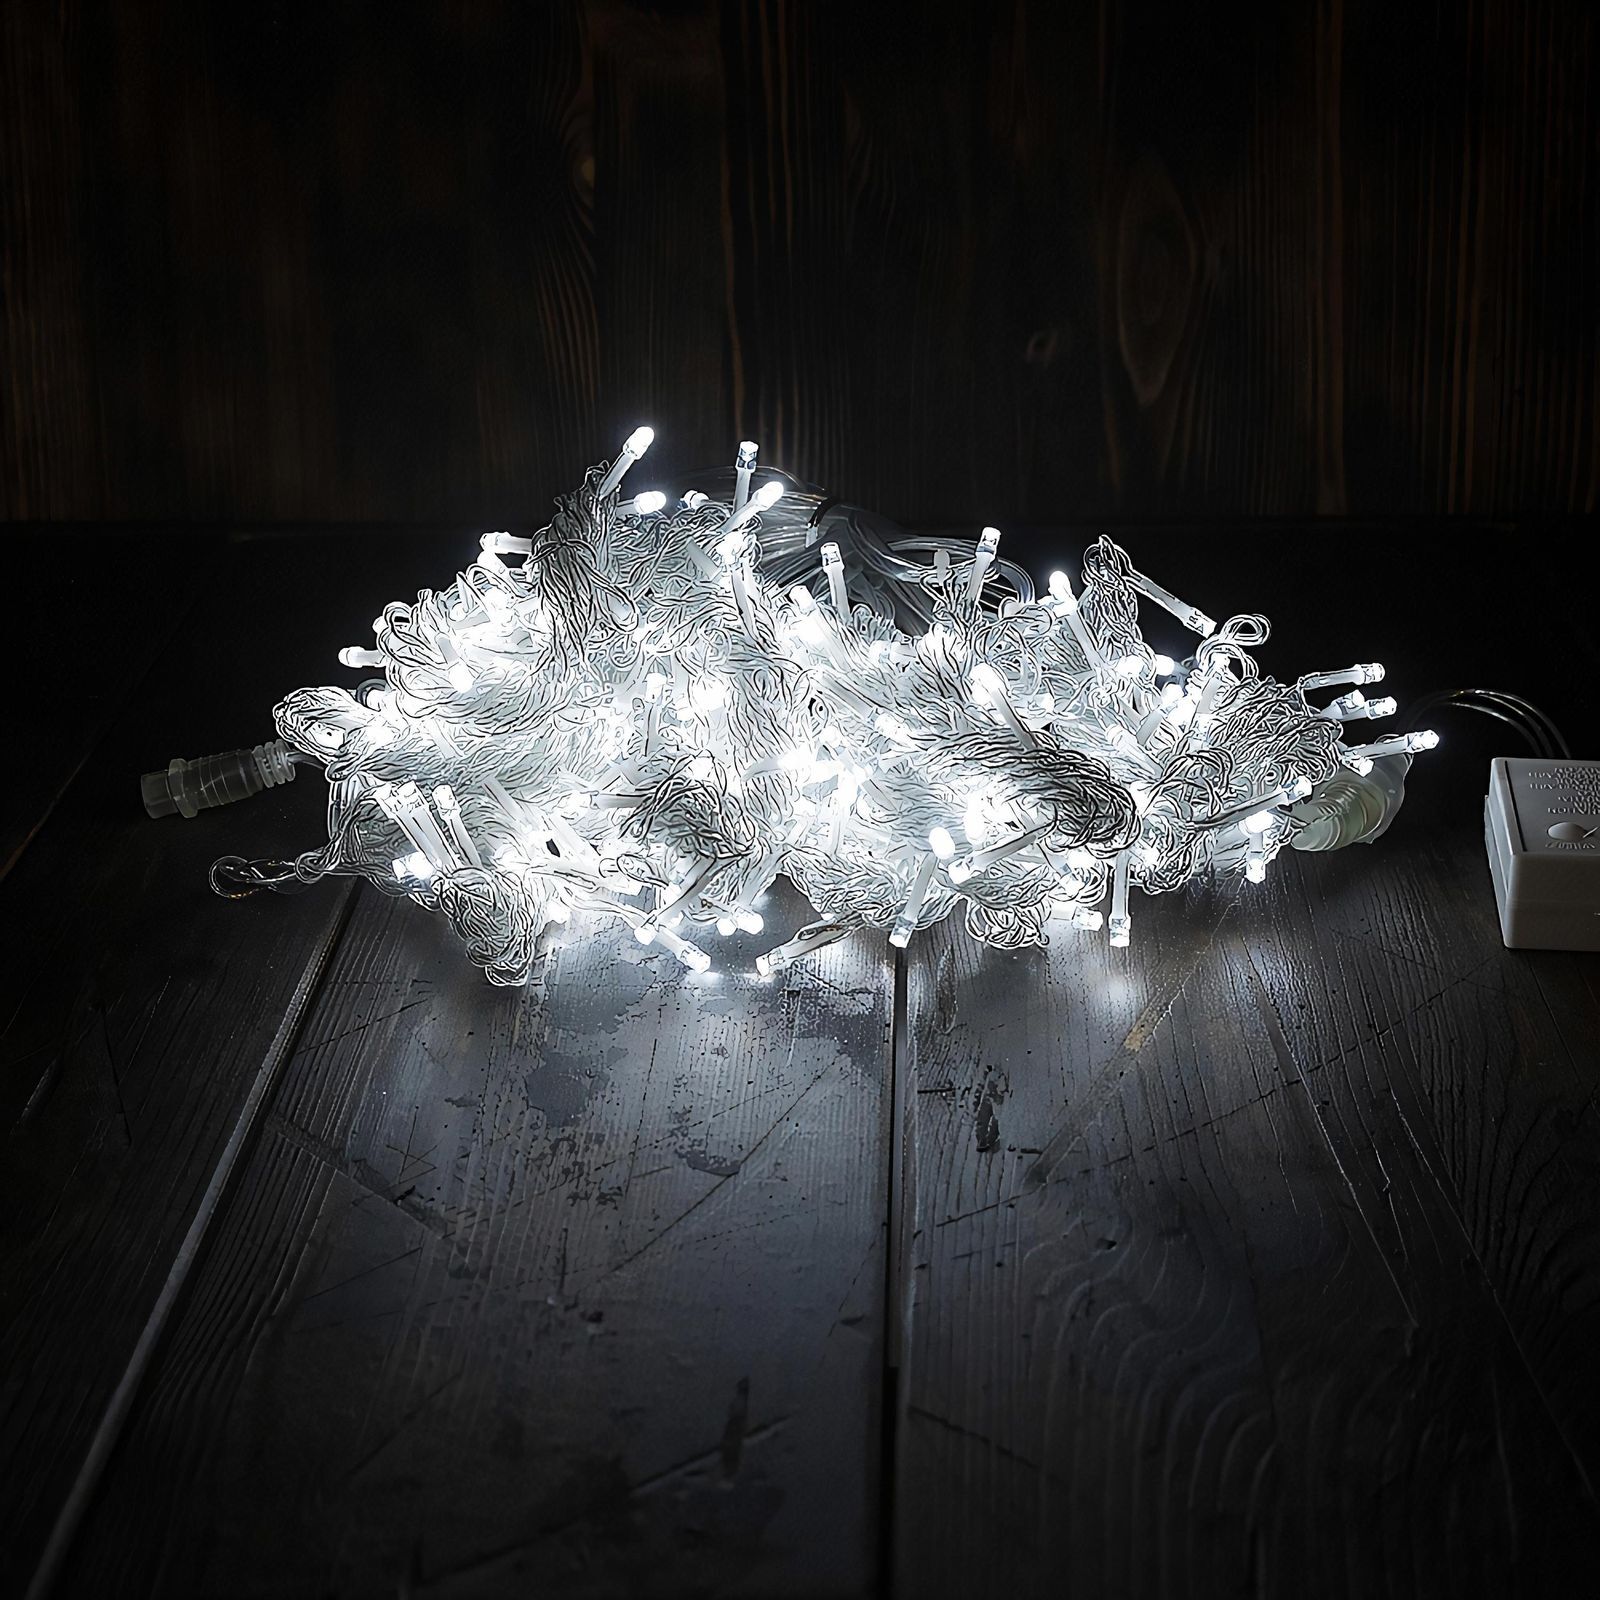 Новогодняя гирлянда Merry Christmas штора 480LED белый прозрачный провод 3мх2м пульт ДУ